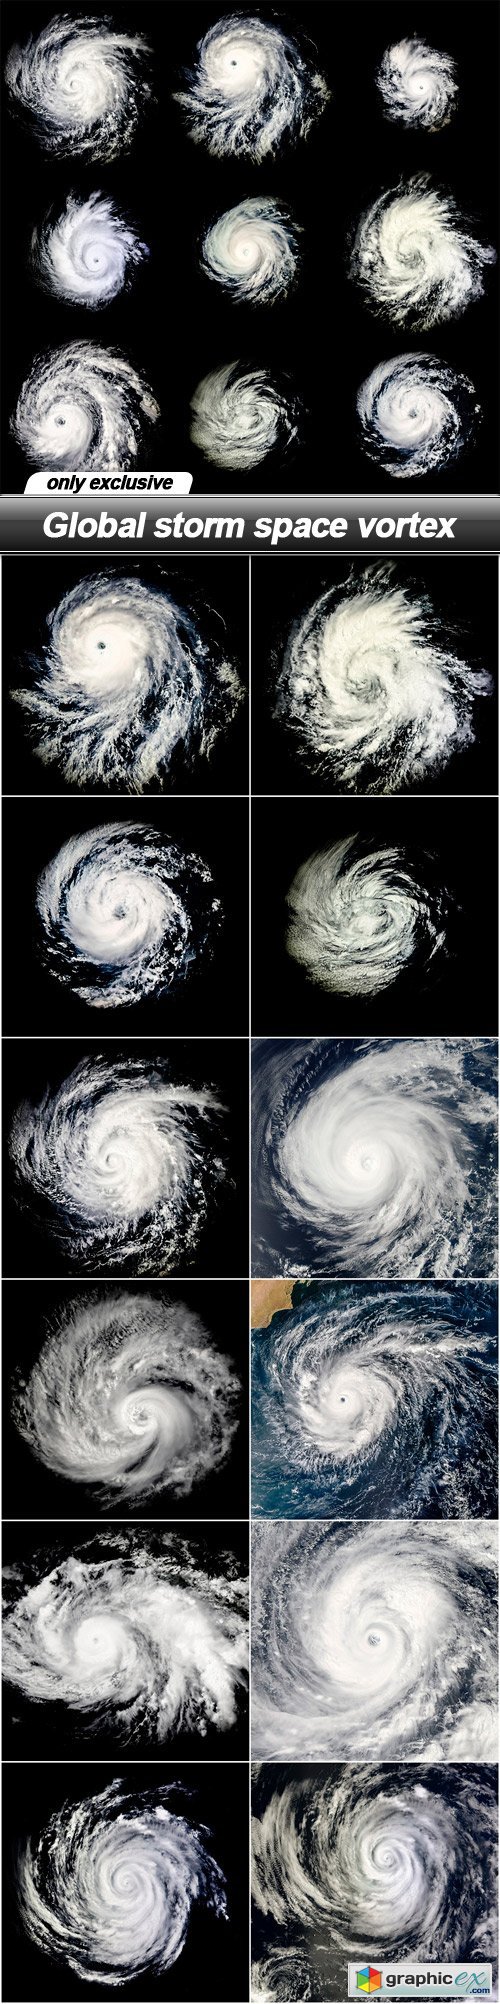 Global storm space vortex - 13 UHQ JPEG